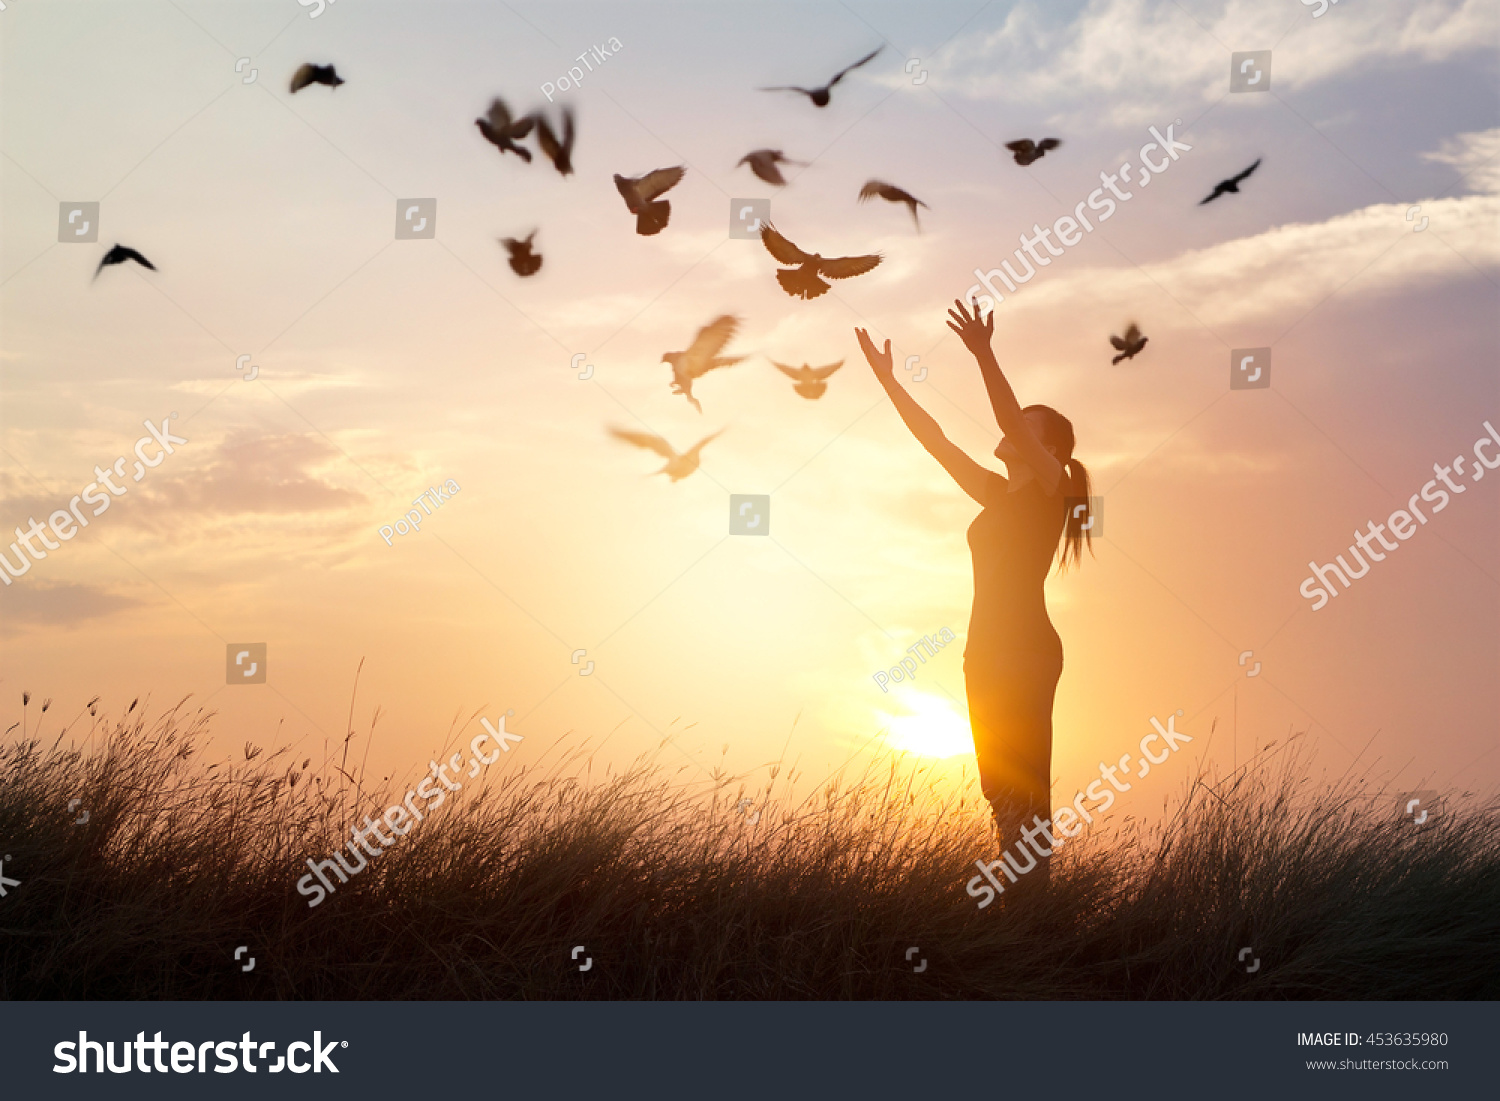 Woman praying and free bird enjoying nature on sunset background, hope concept #453635980